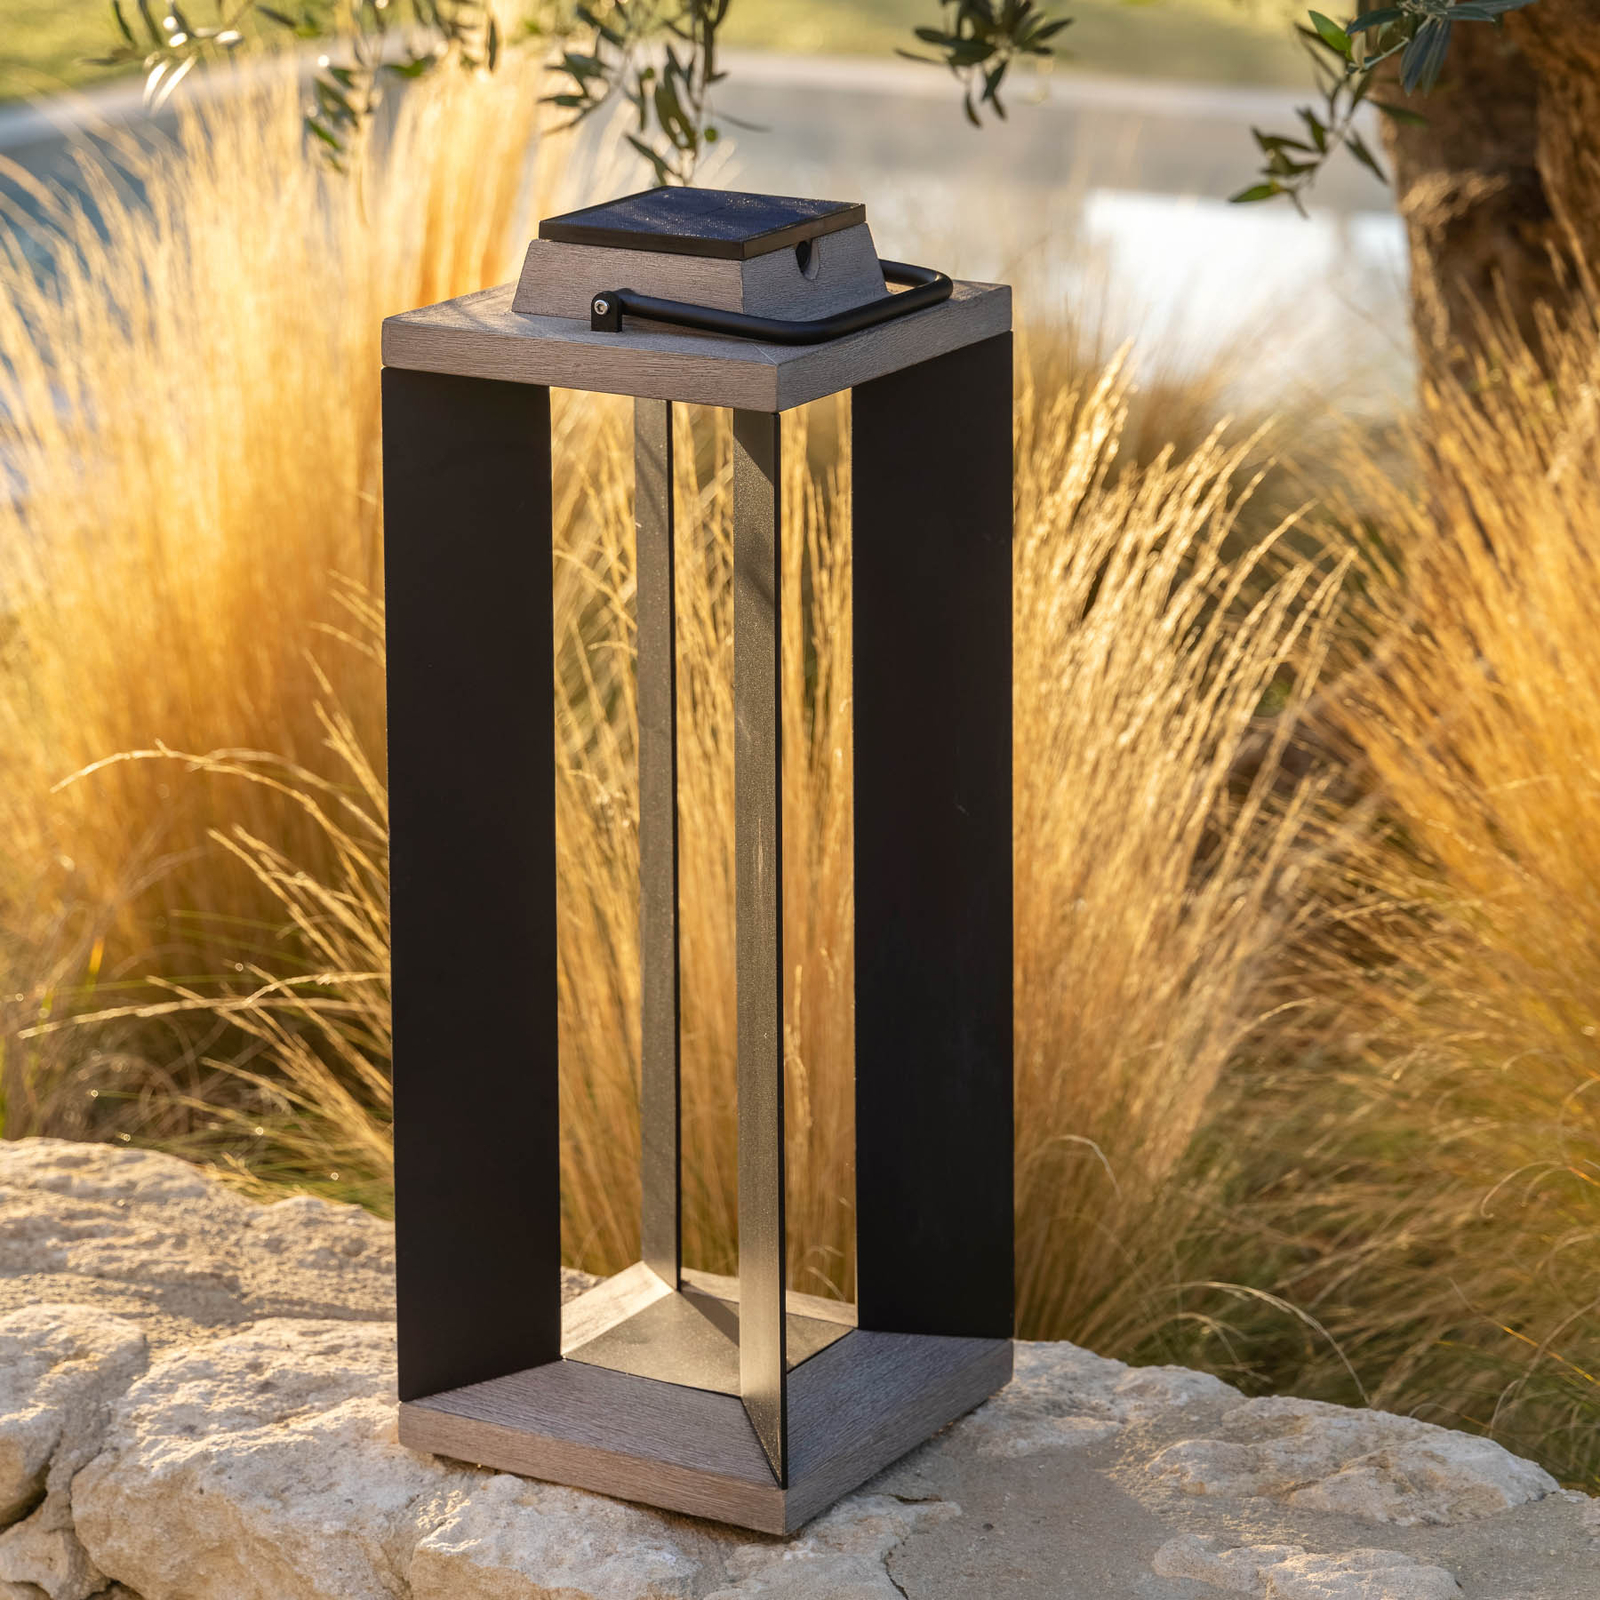 Teckalu solar lantern, Duratek/aluminium black, 65.5cm